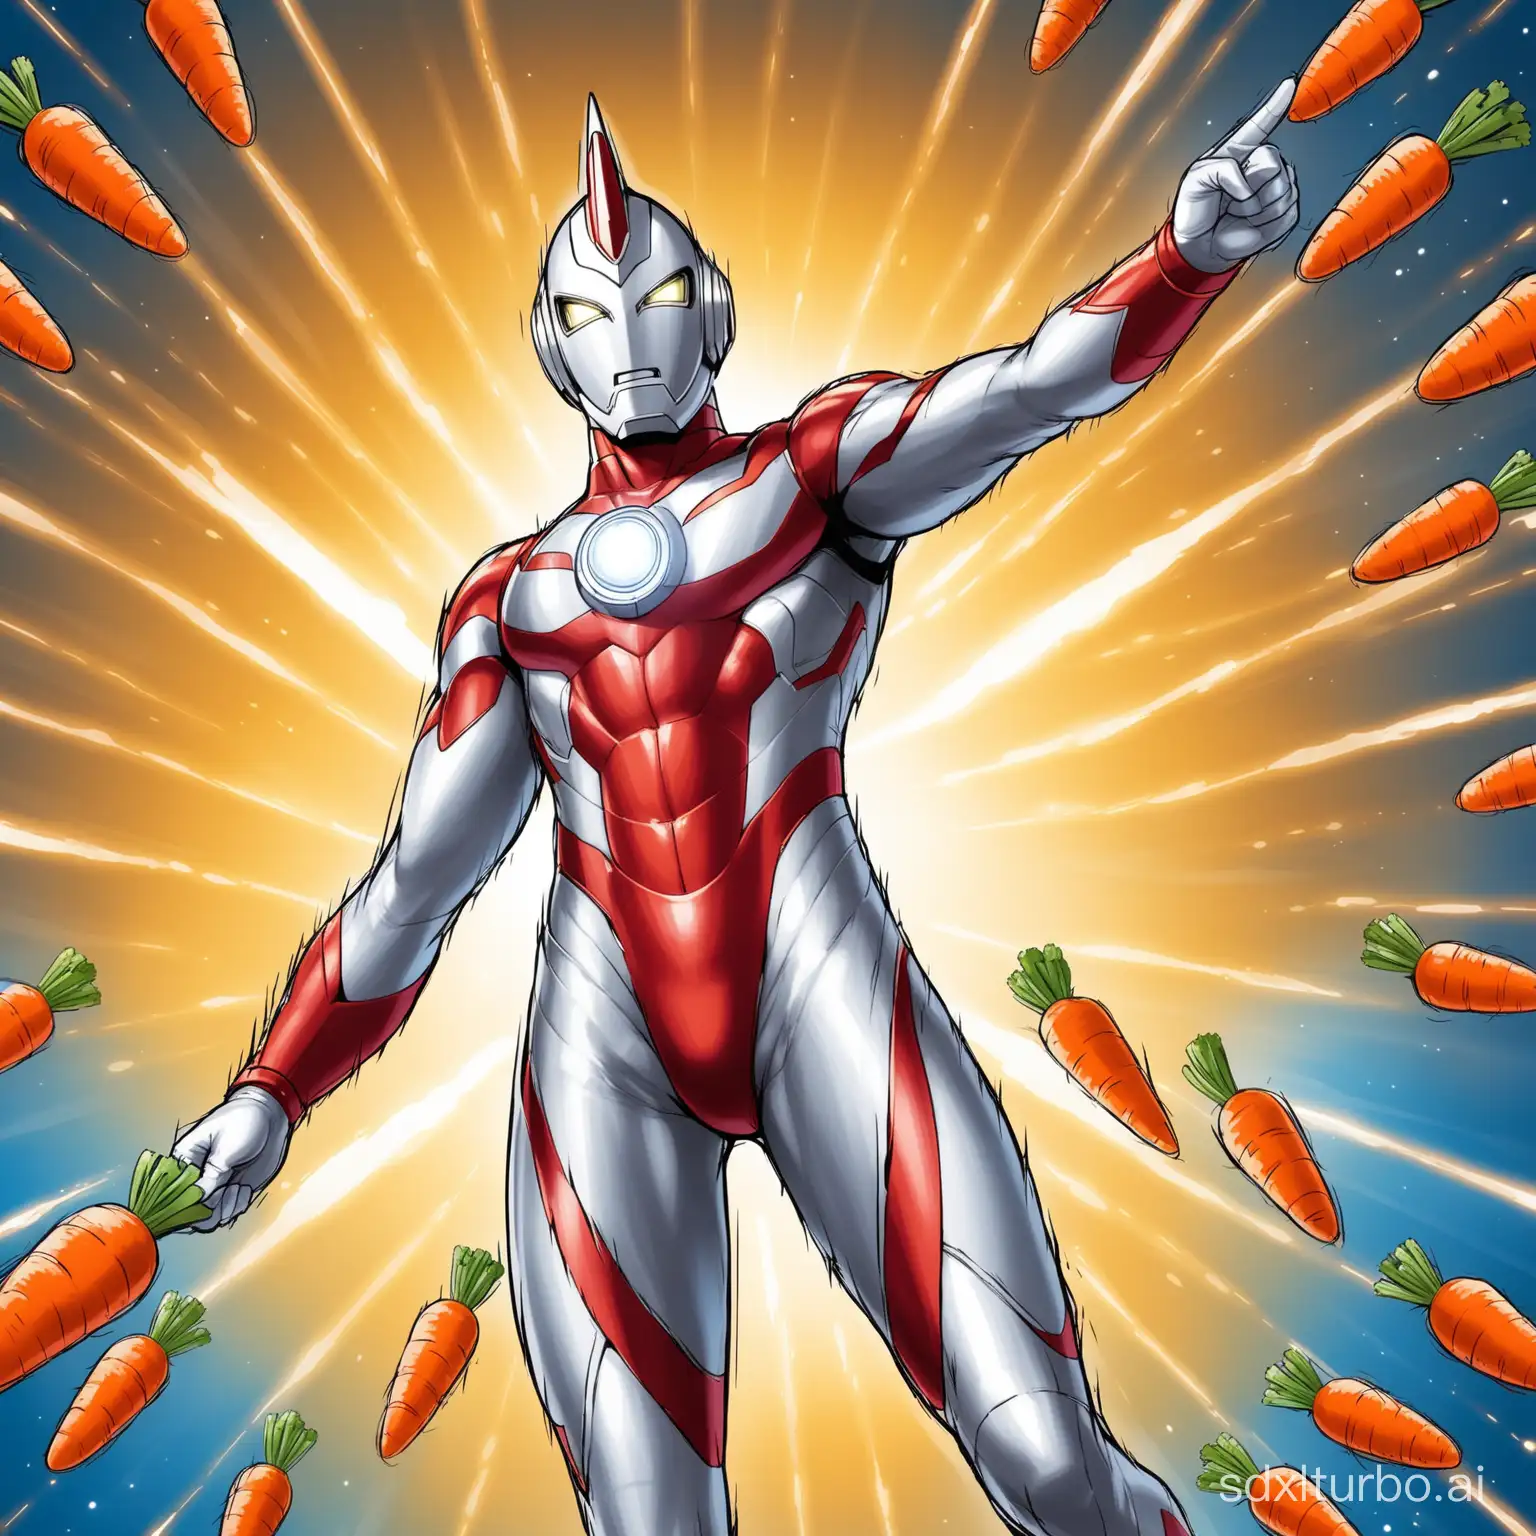 Ultraman and carrots